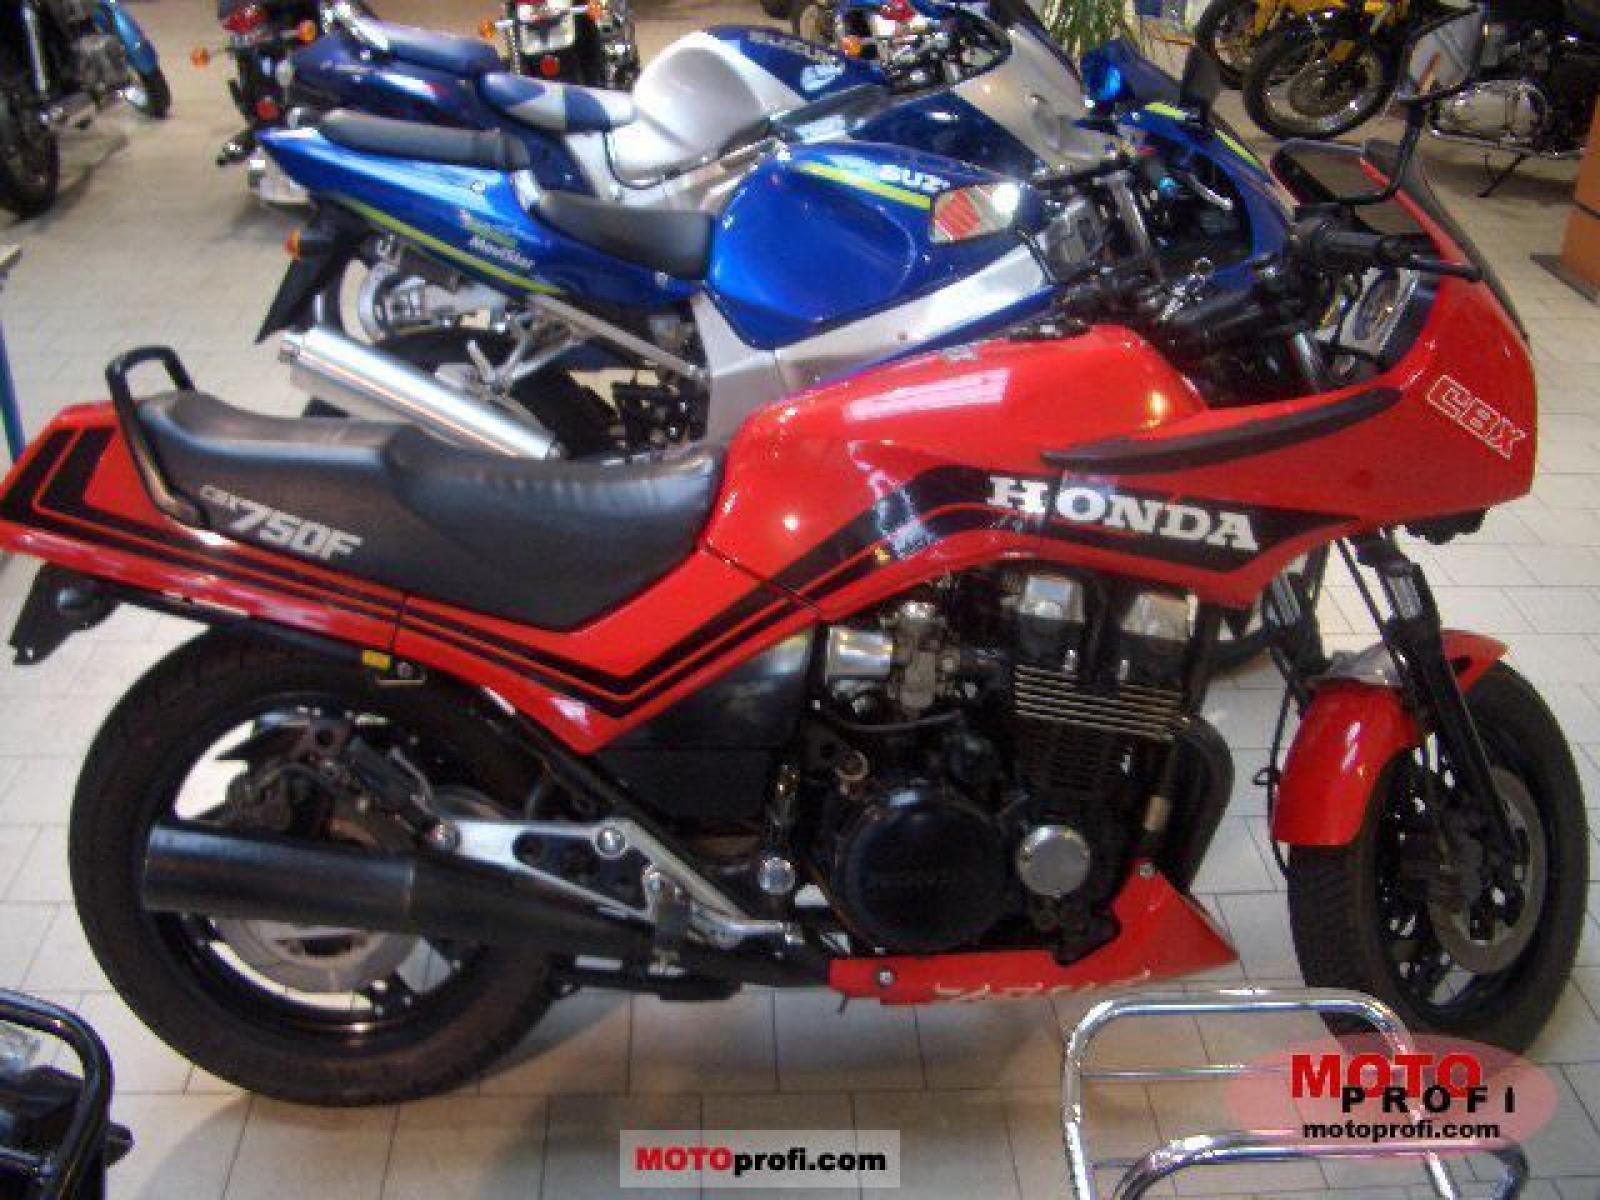 Honda CBX750 - Wikipedia